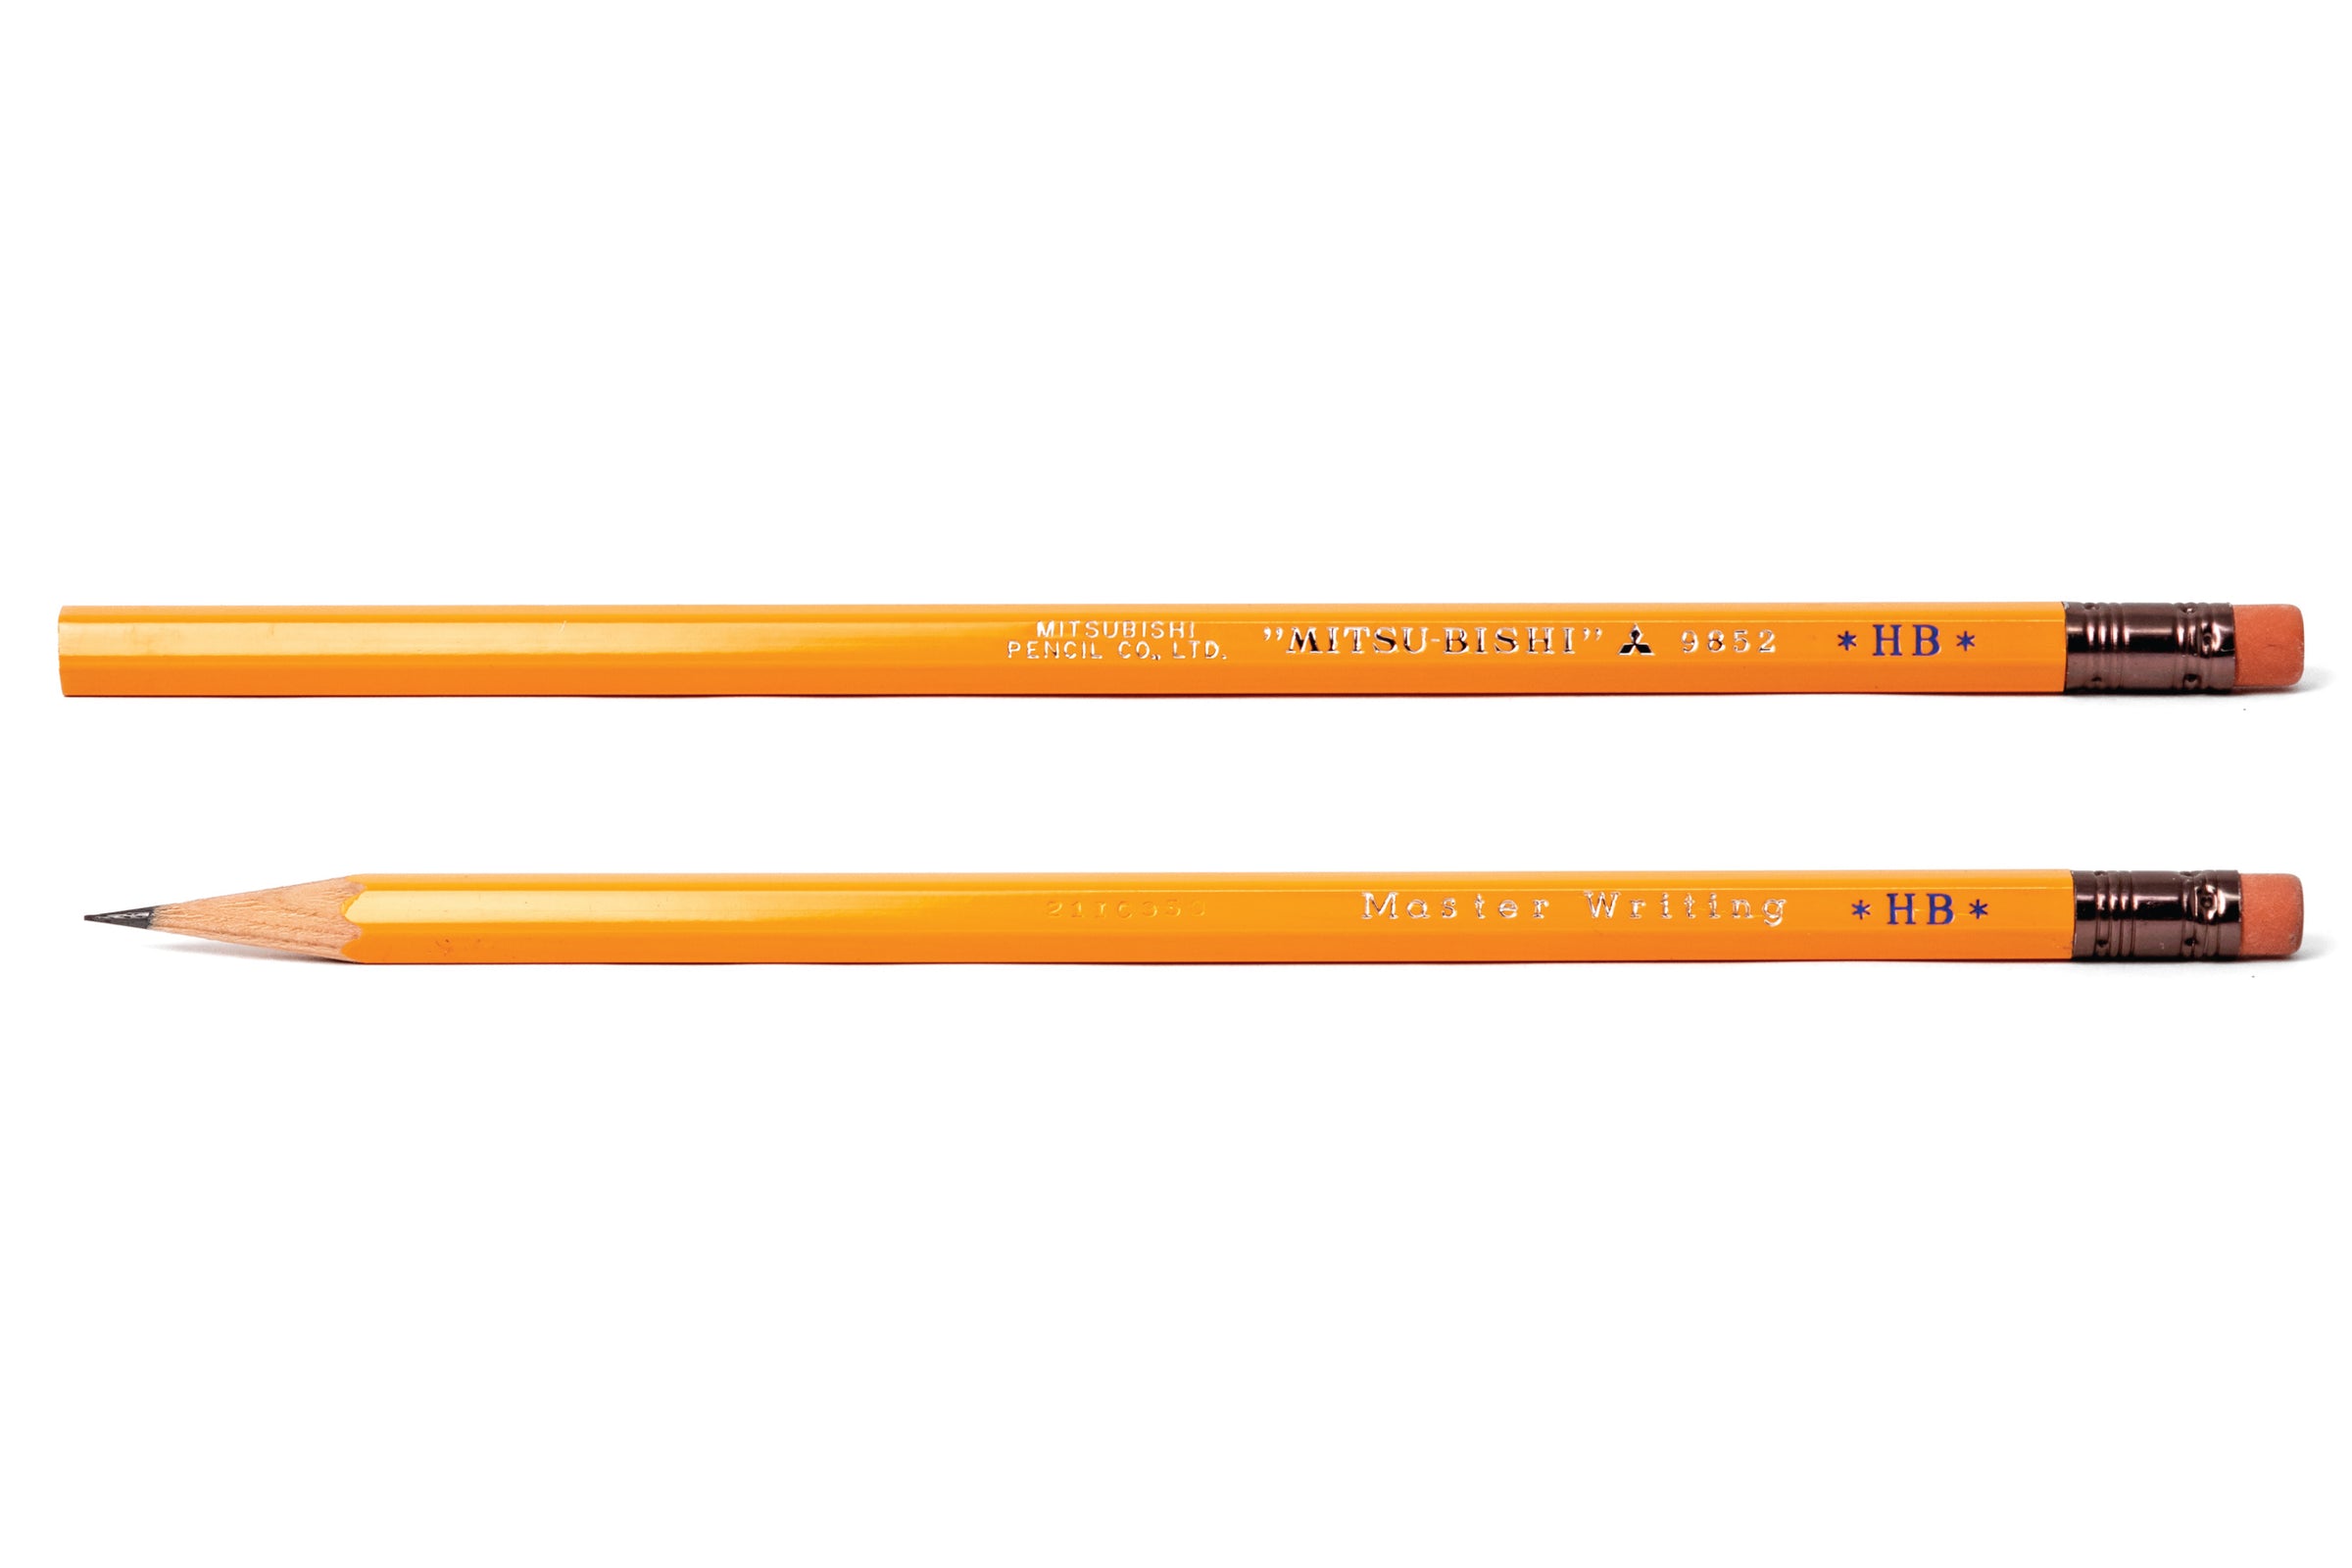 Mitsubishi 9852 Master Writing Pencil, HB, Box of 12 – St. Louis